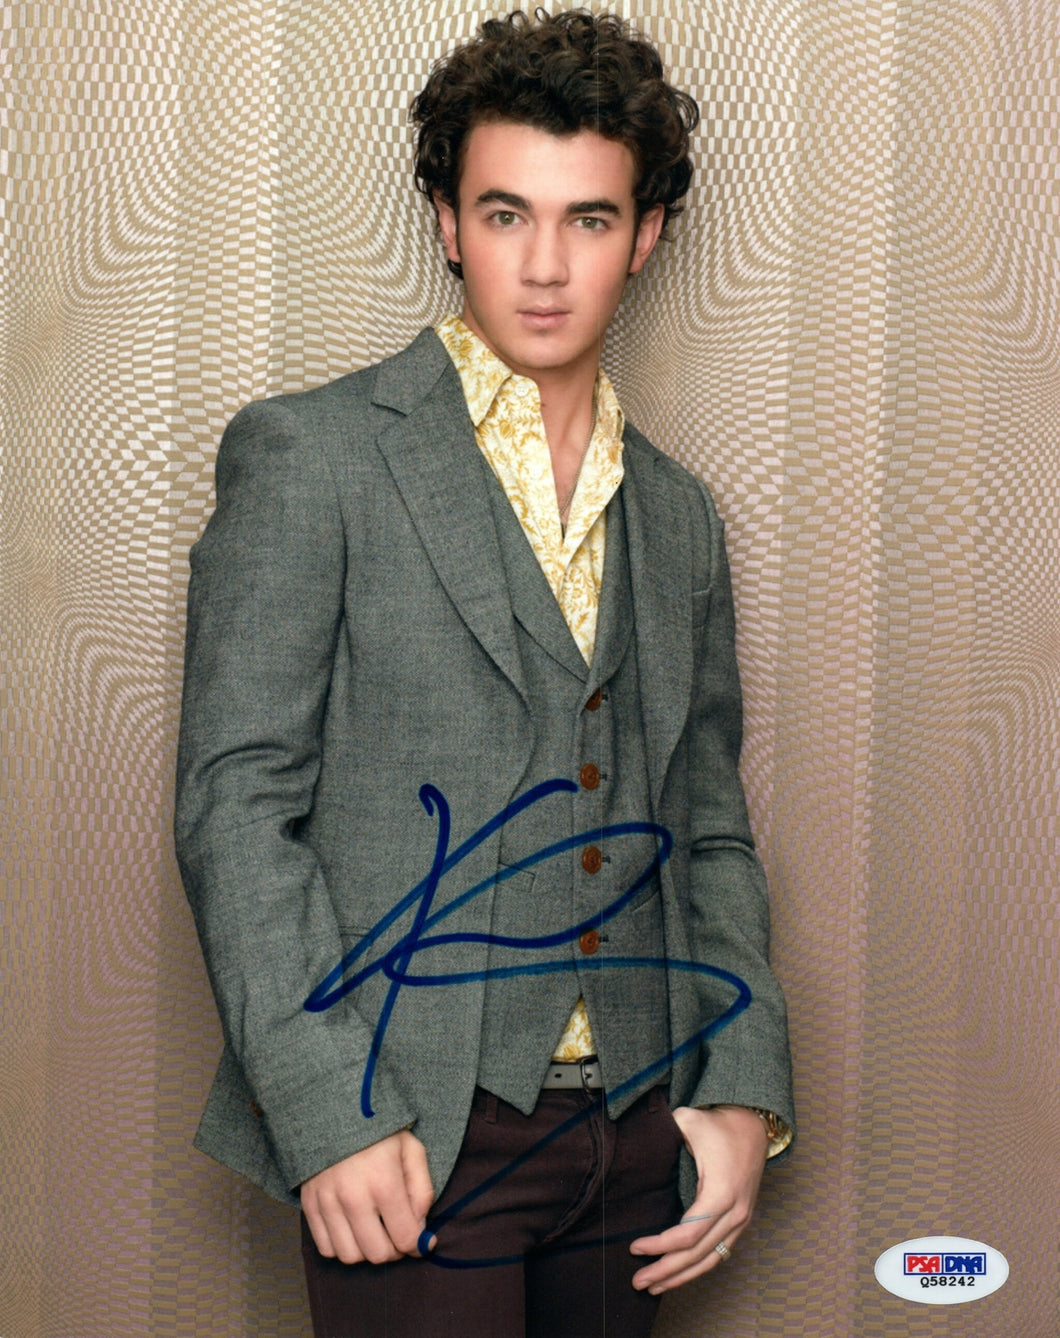 Jonas Brothers Kevin Jonas Autographed Signed 8x10 Photo